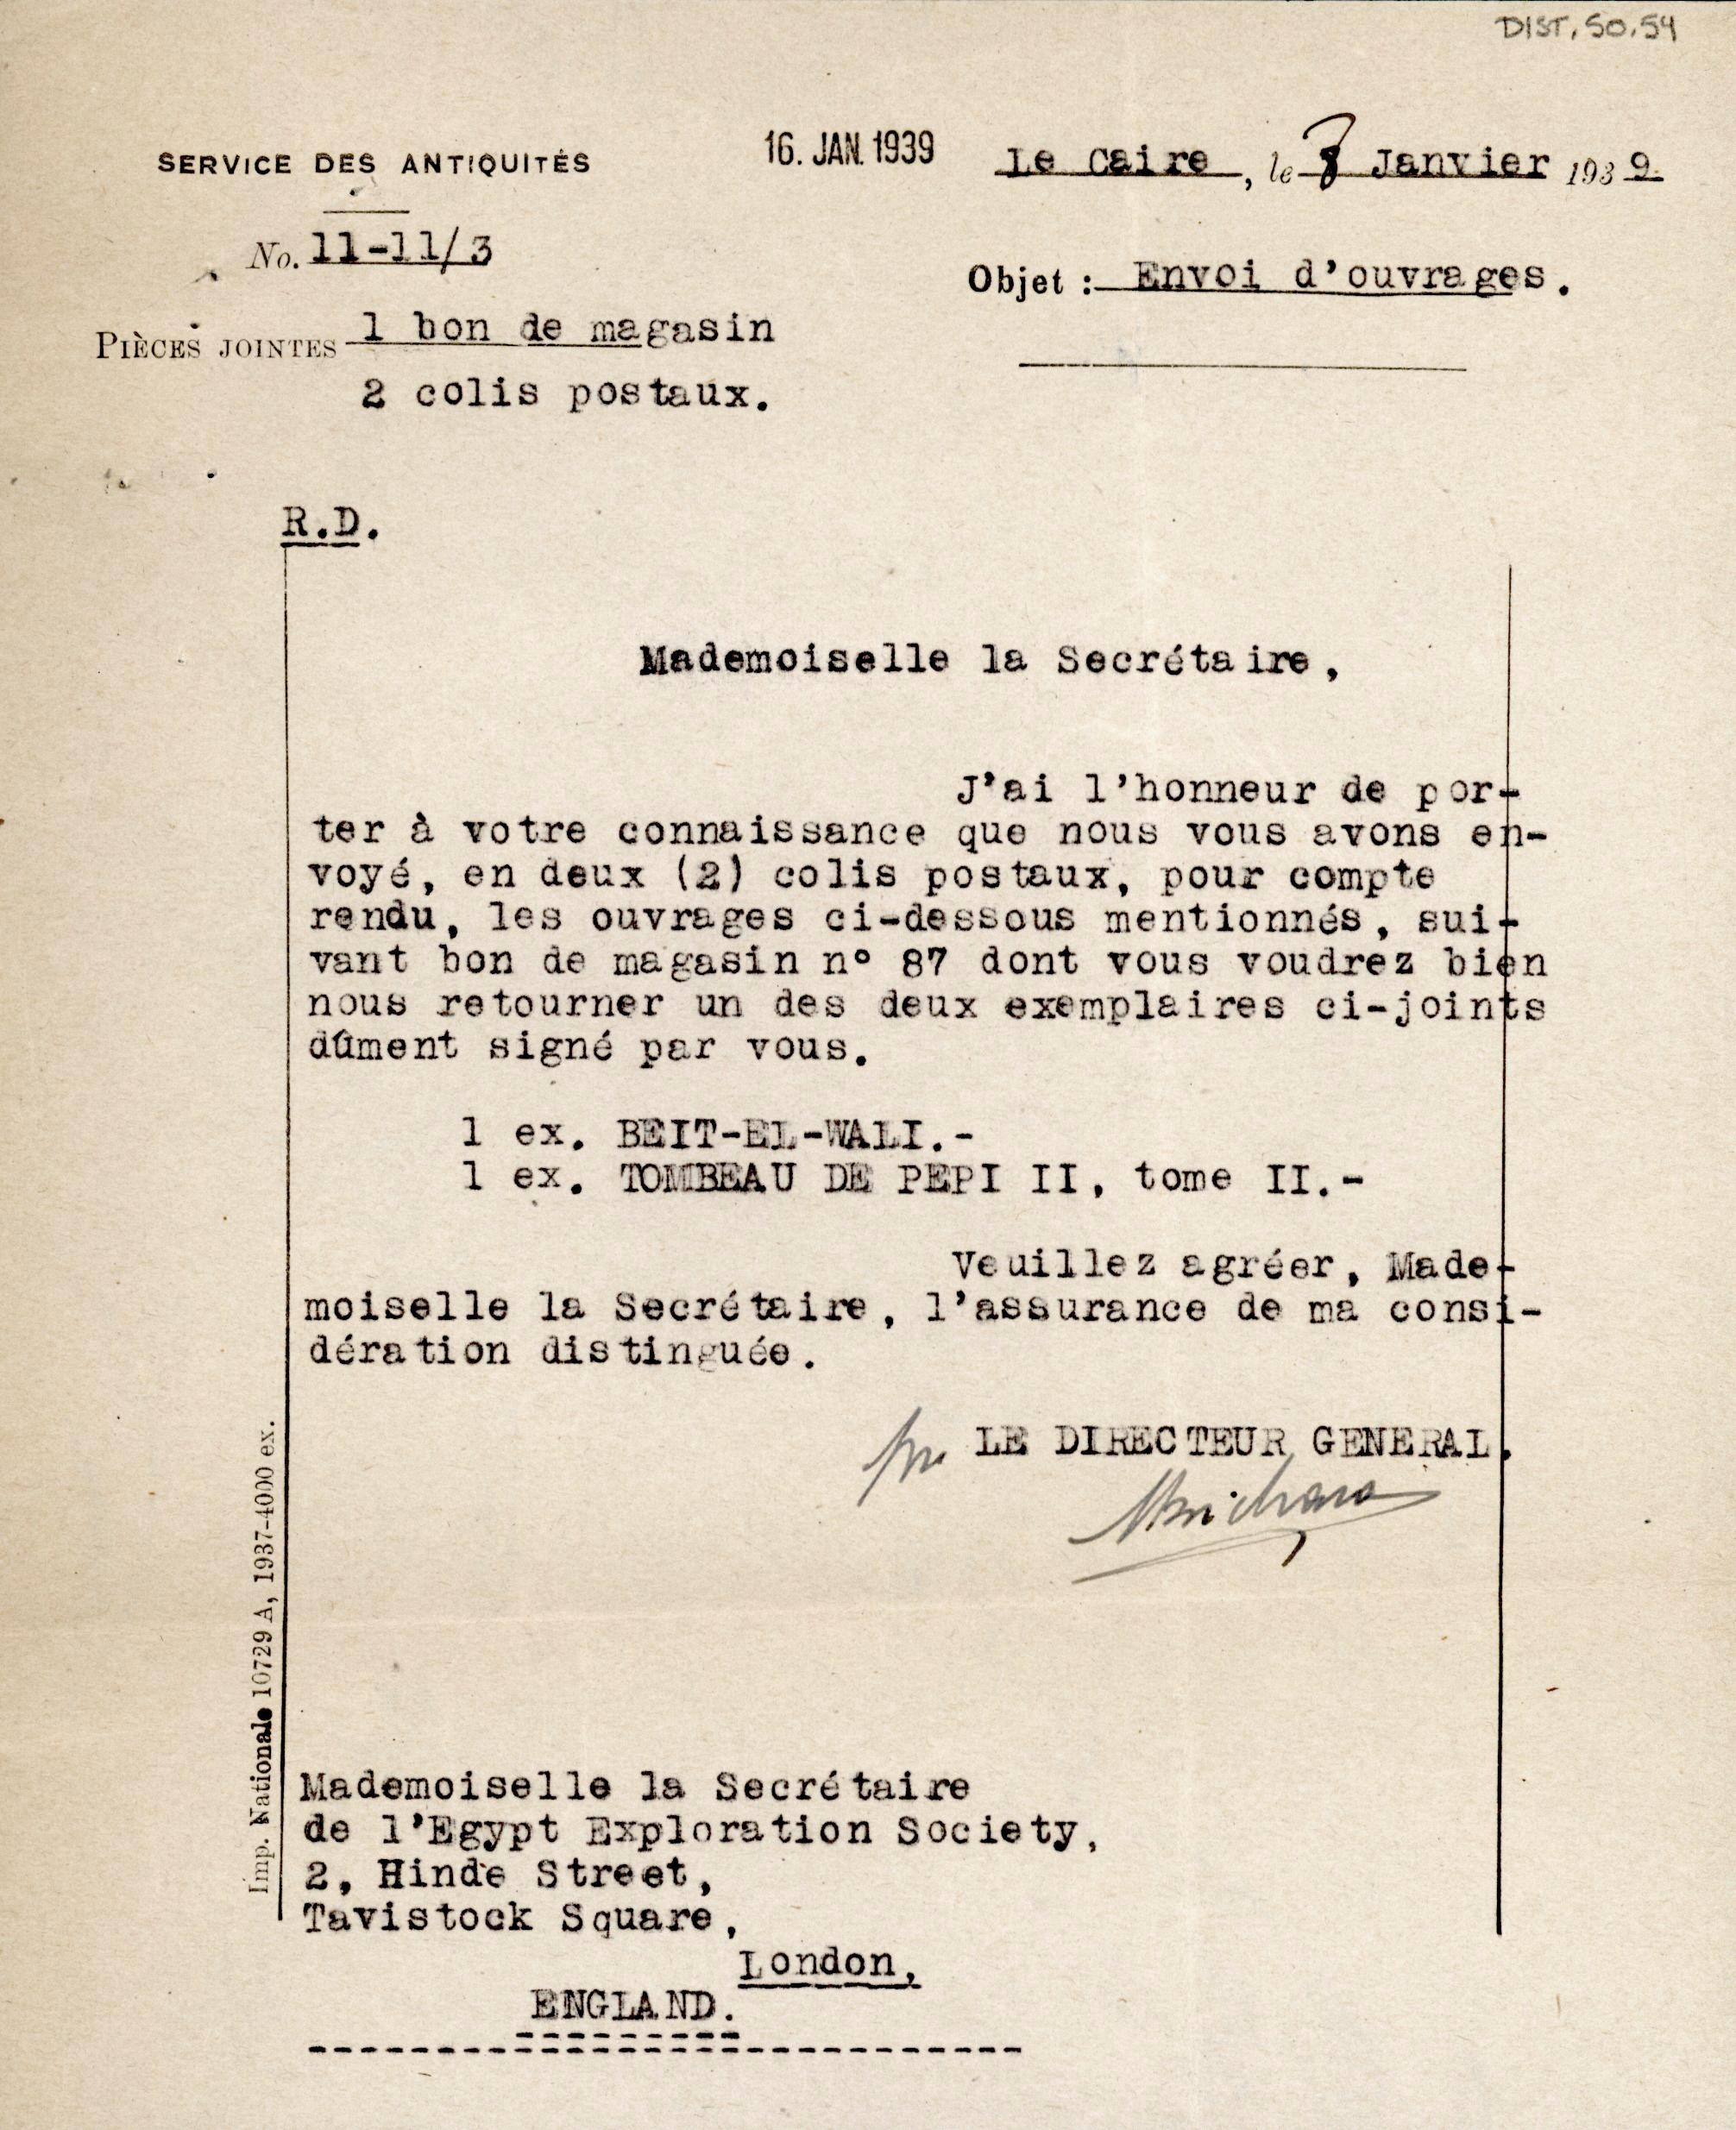 1926-39 correspondence with Antiquities Service DIST.50.54